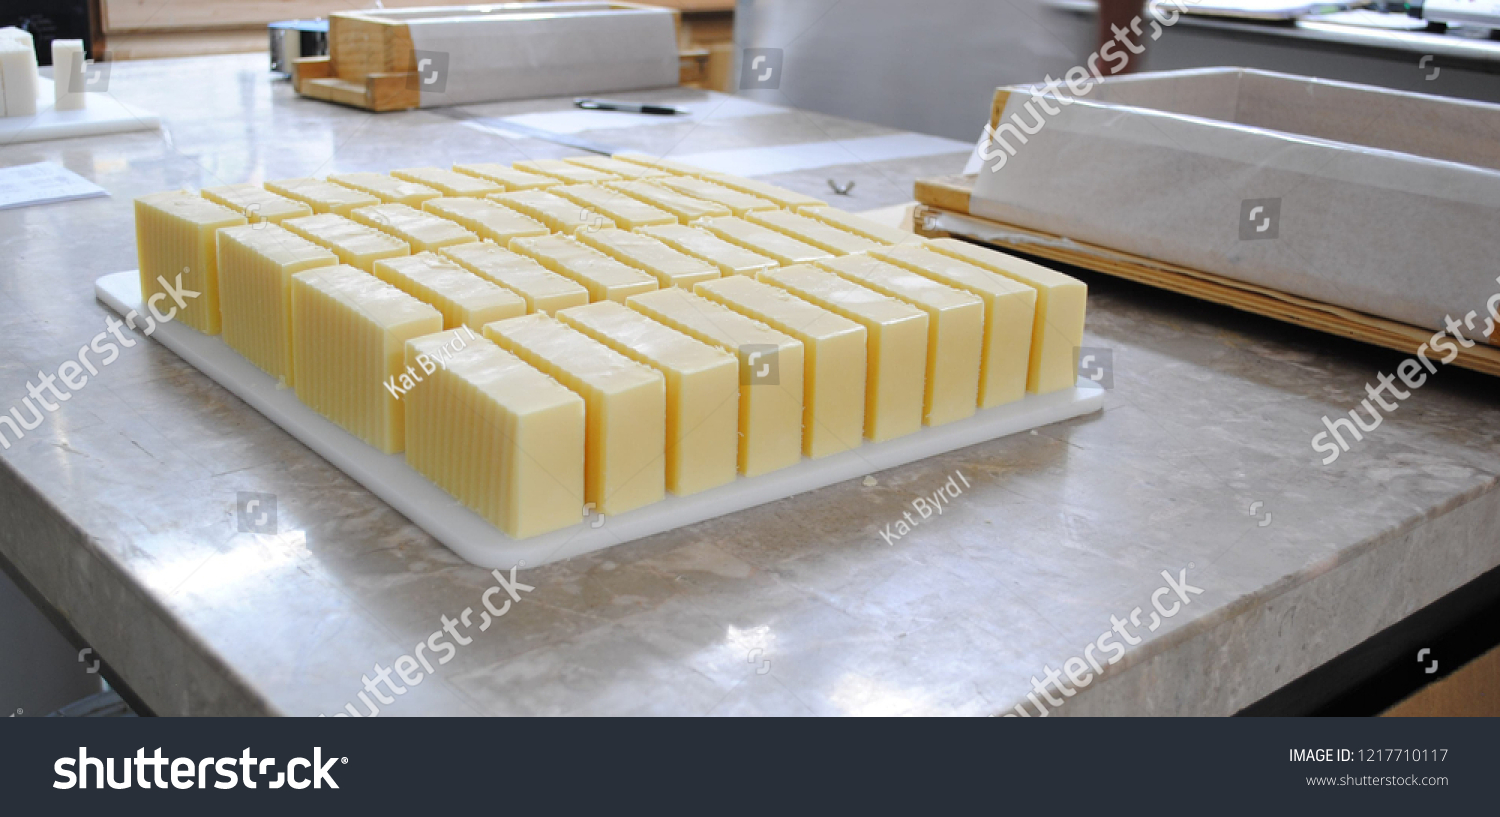 Cut Handmade Soap - Making Handmade Soap Inside the Soap Shop. Cut handmade soap on a table.   #1217710117